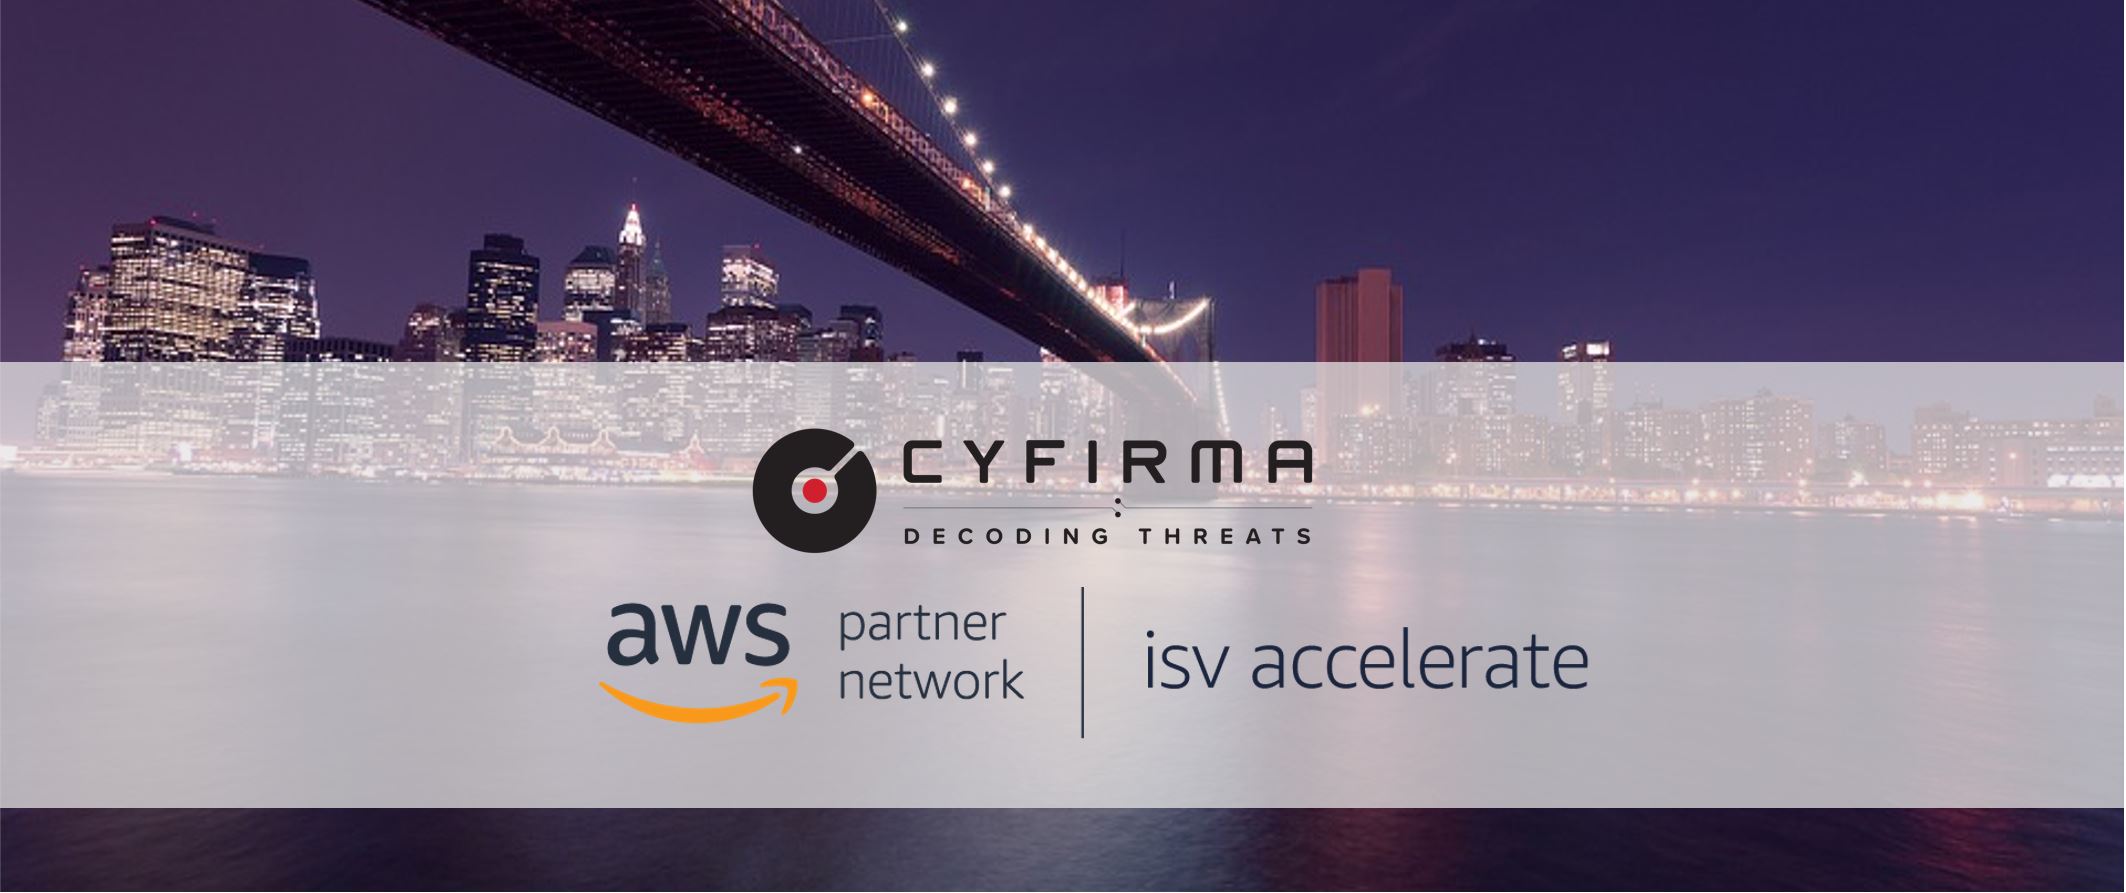 CYFIRMA、脅威ディスカバリーとサイバーインテリジェンスを提供するプラットフォームをAWS Marketplaceにて提供開始